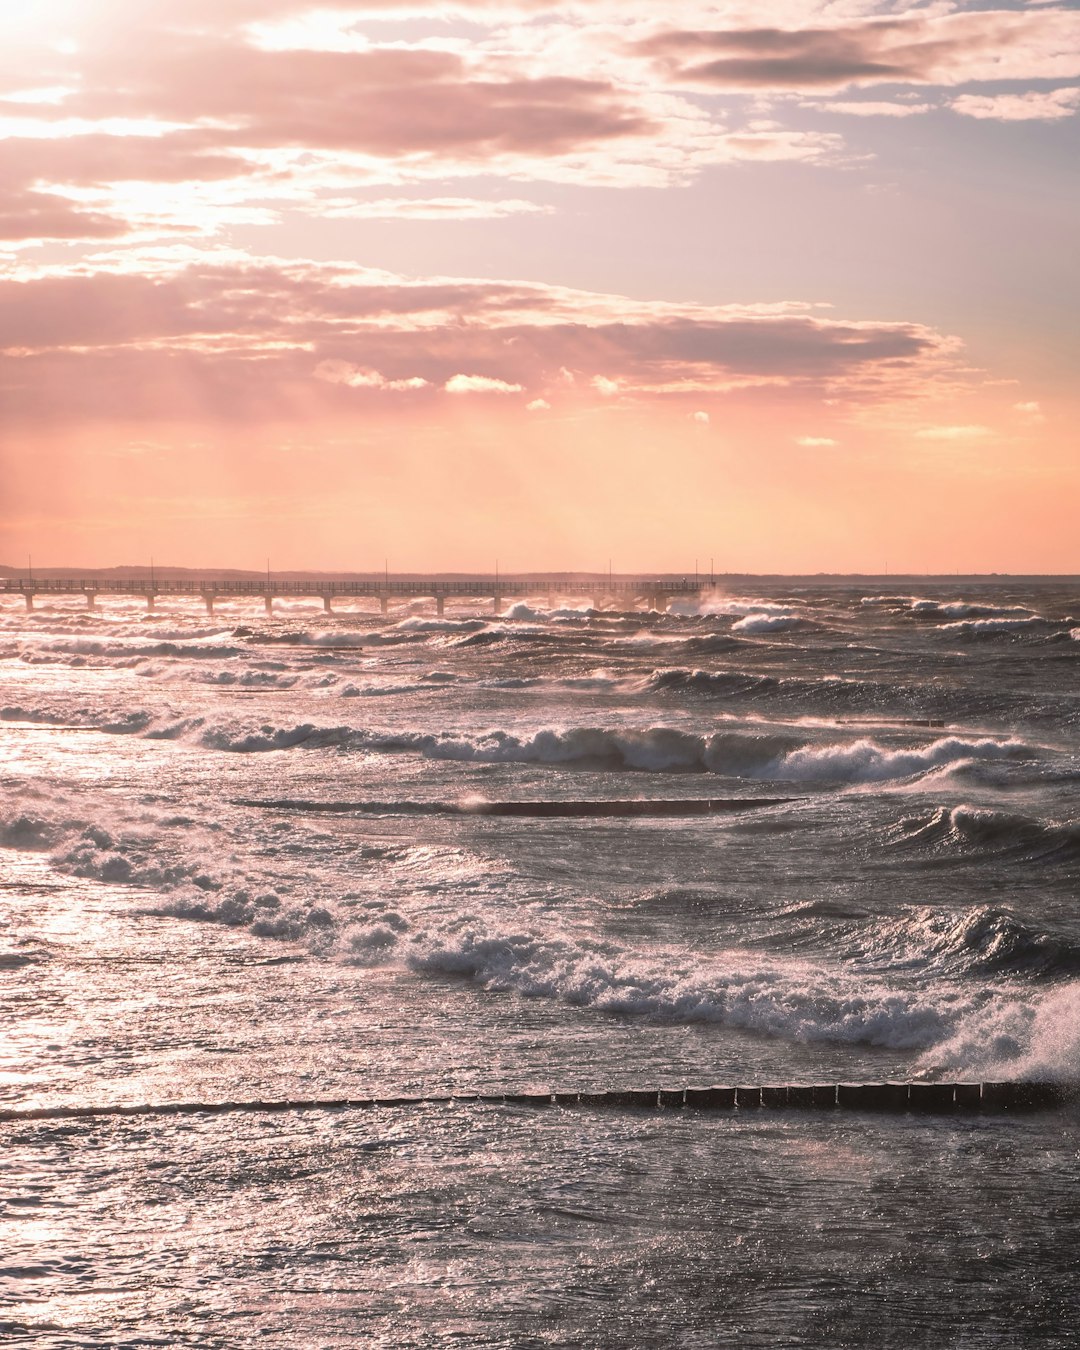 sea waves crashing on shore during sunset